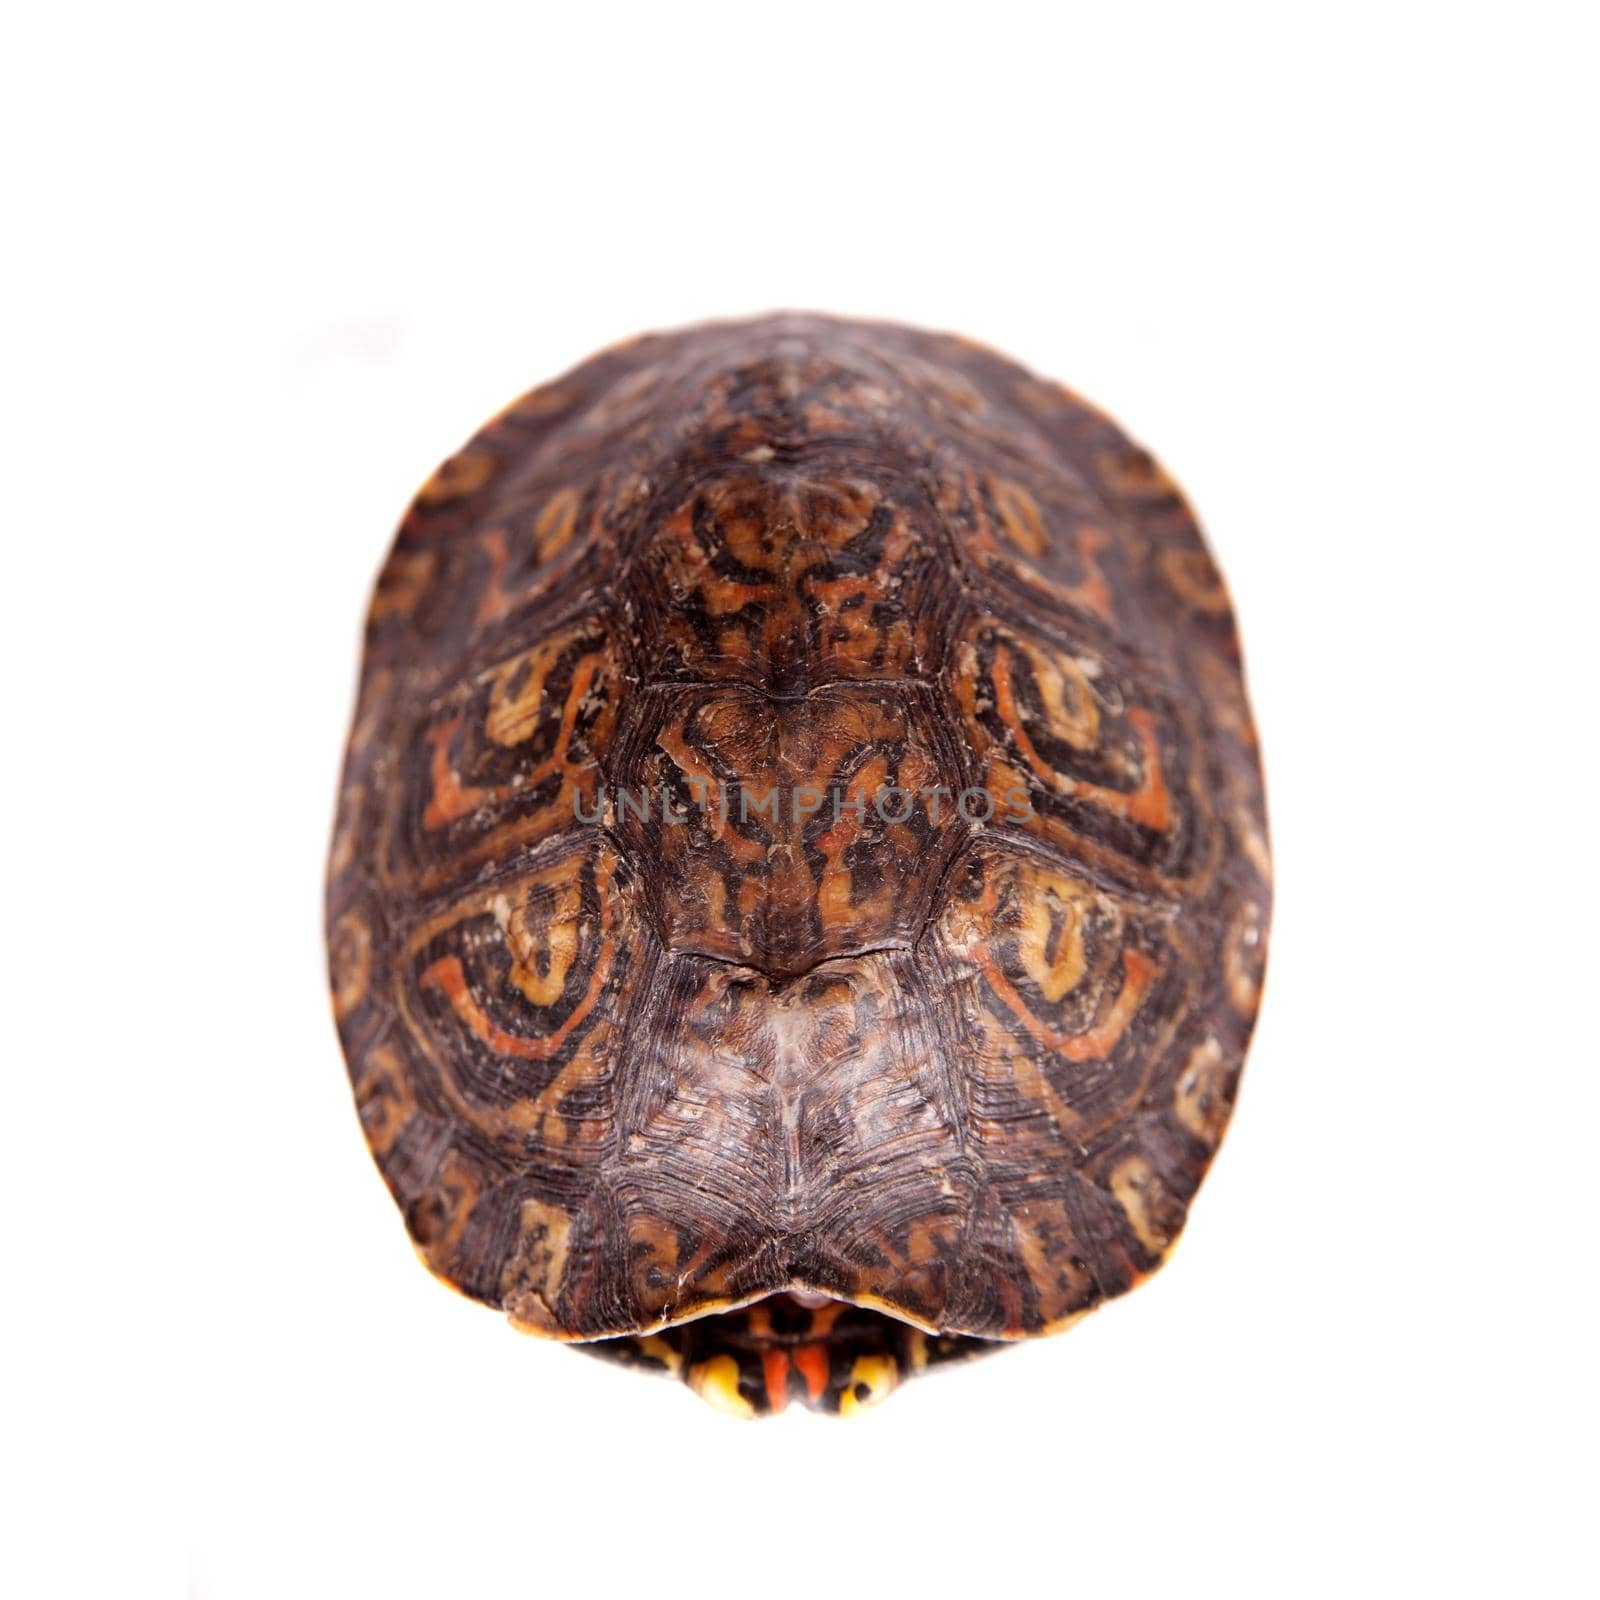 The Painted wood turtle, Rhinoclemmys pulcherrima manni, isolated on white background